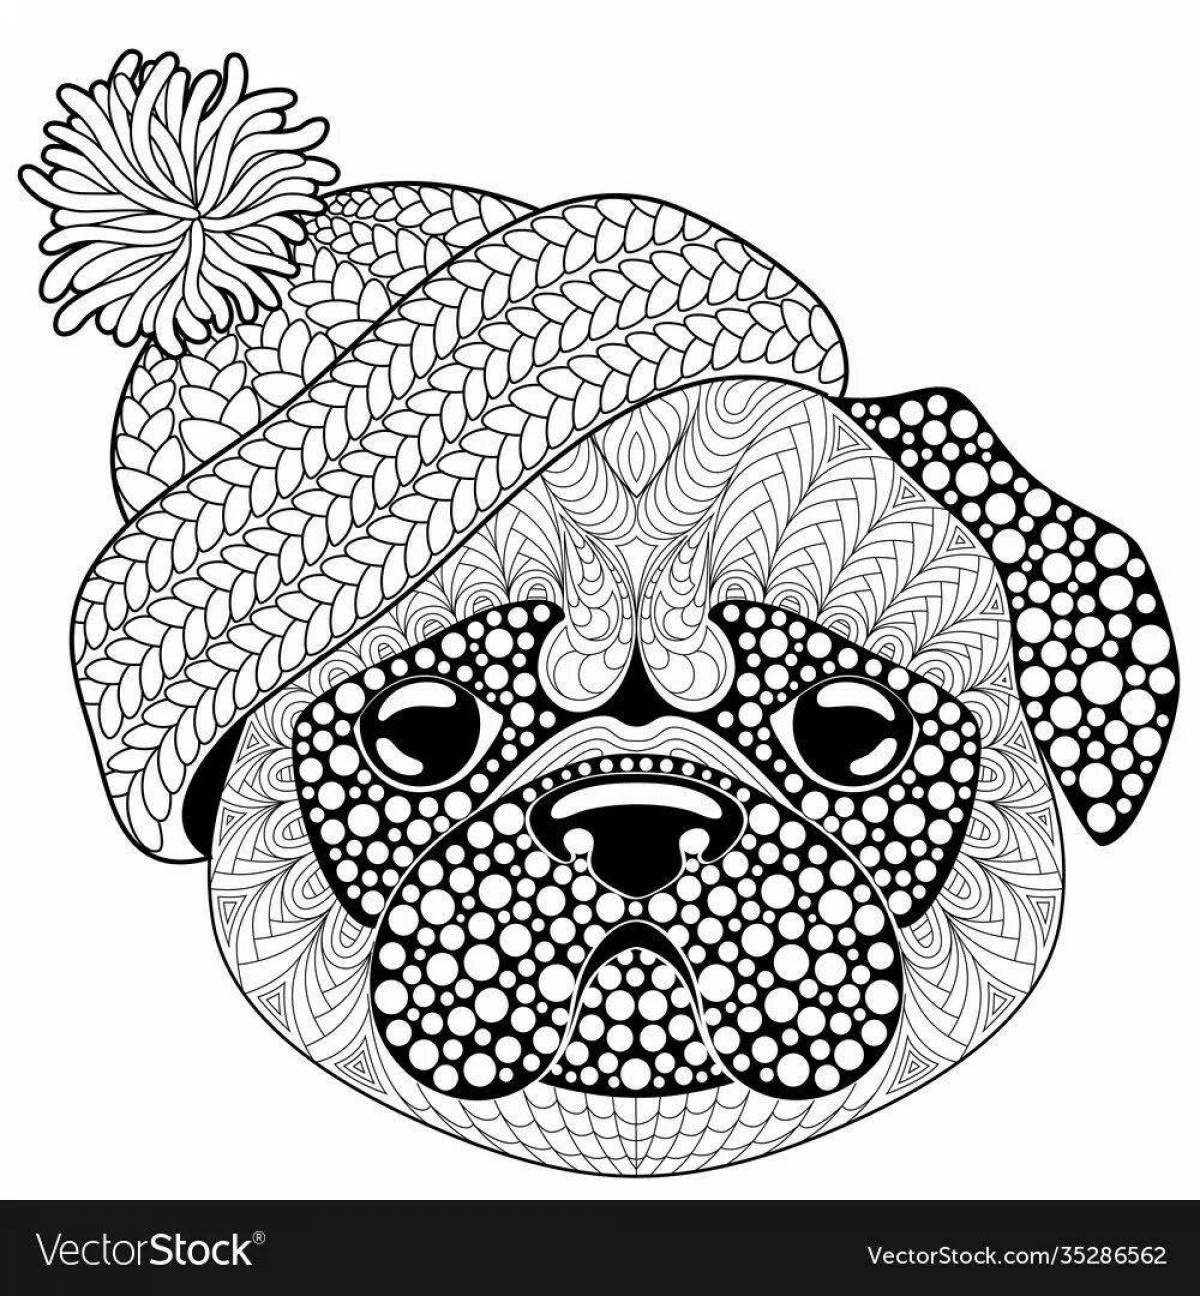 Funny coloring pug antistress